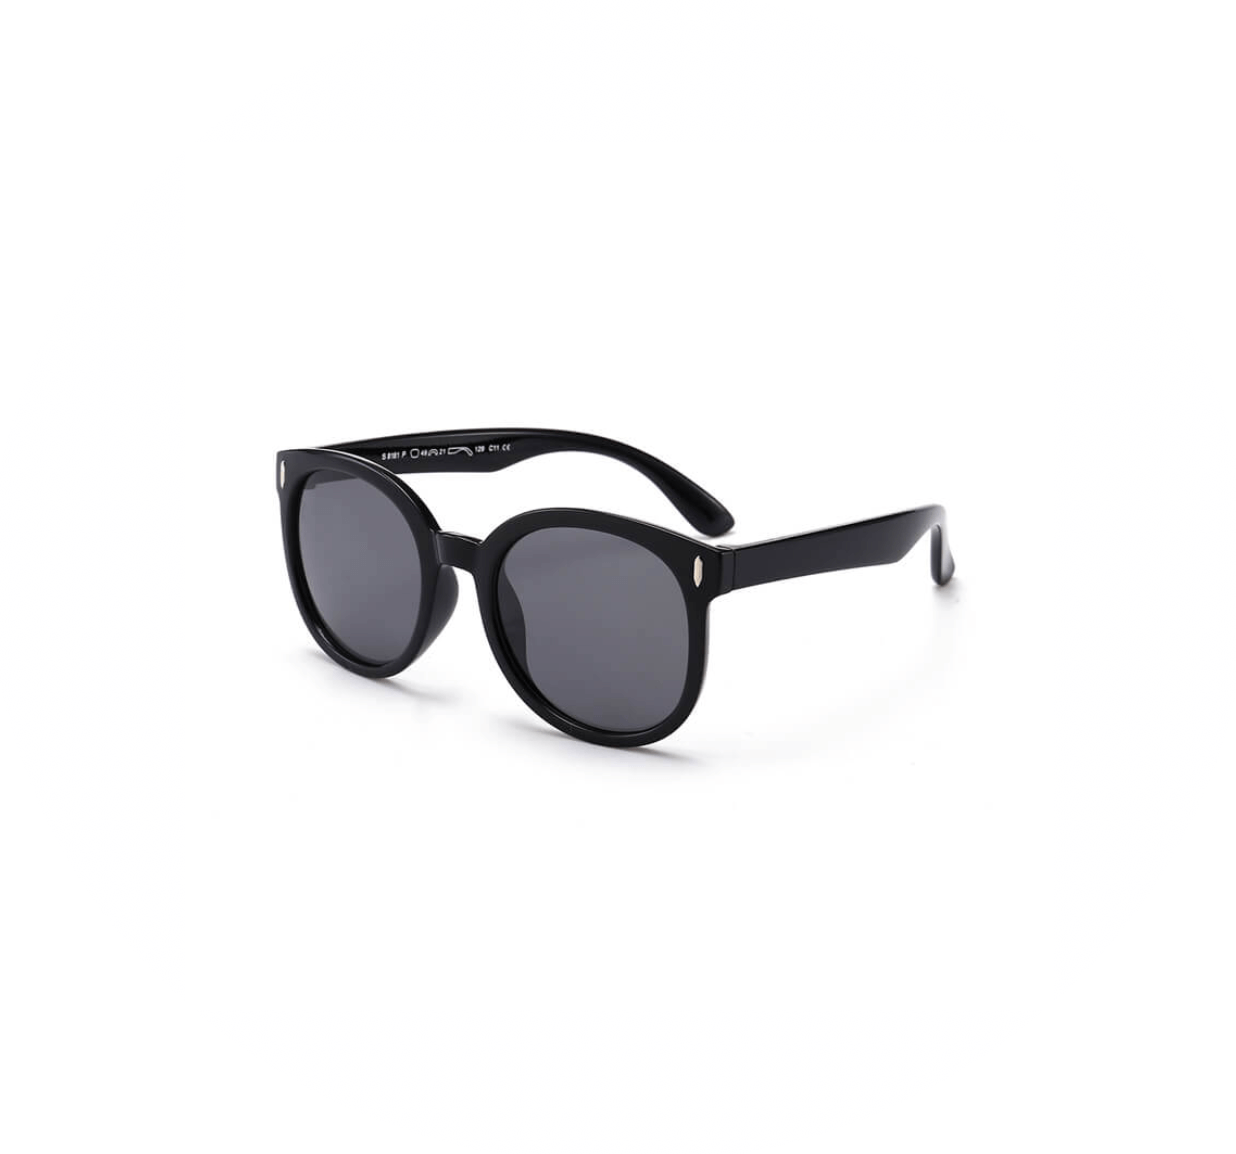 Custom Polarized Sunglasses, black kids sunglasses, custom logo polarized sunglasses, China Sunglasses Manufacturer, eyewear supplier